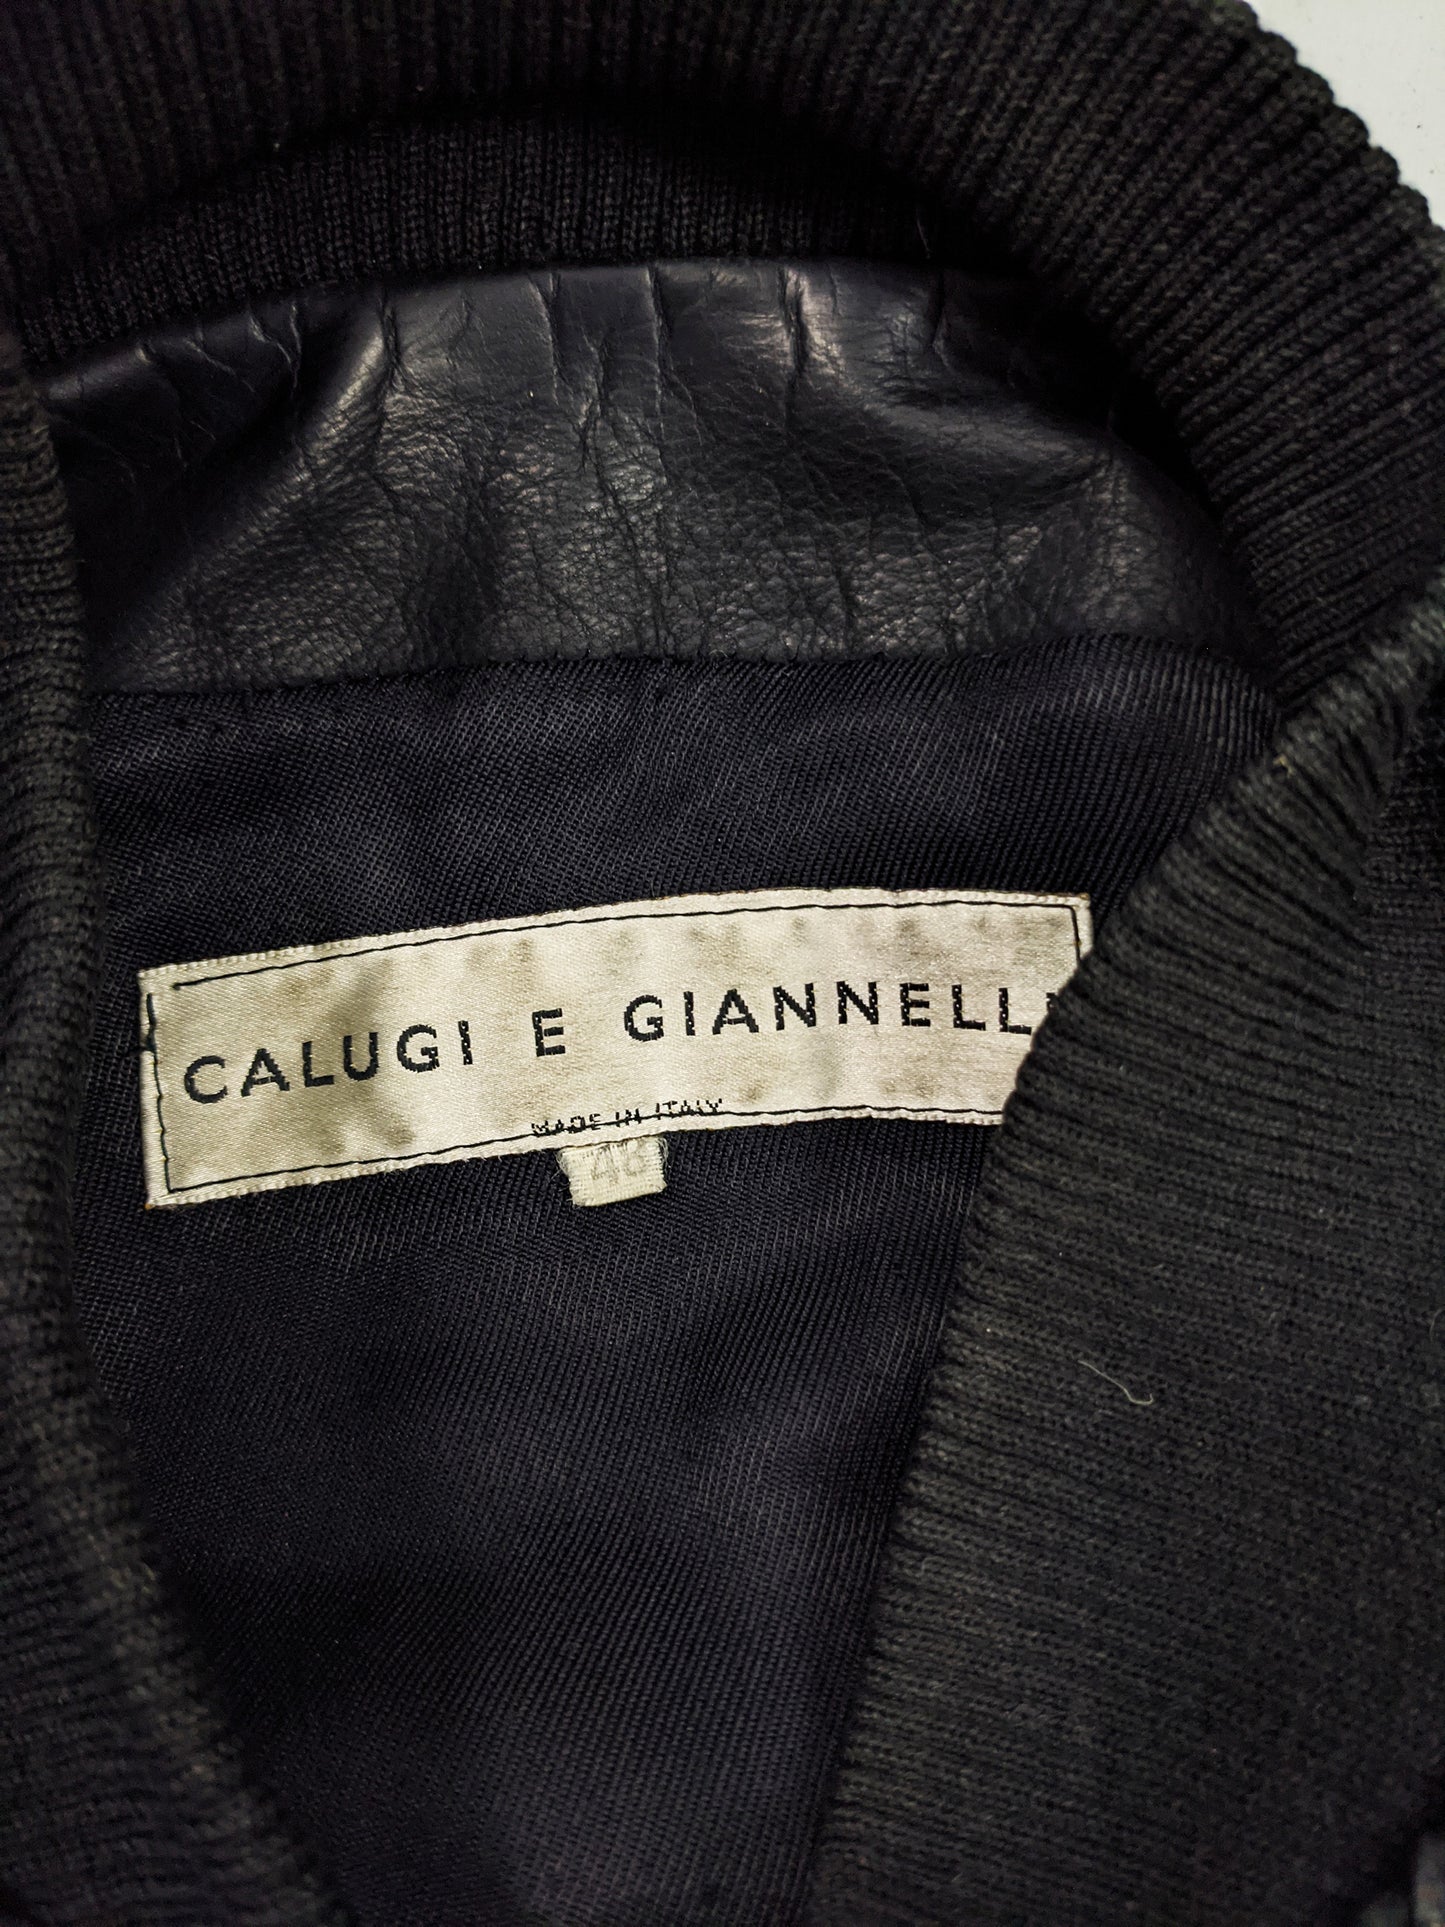 Calugi e Giannelli Vintage Mens Leather Bomber Jacket, 1980s